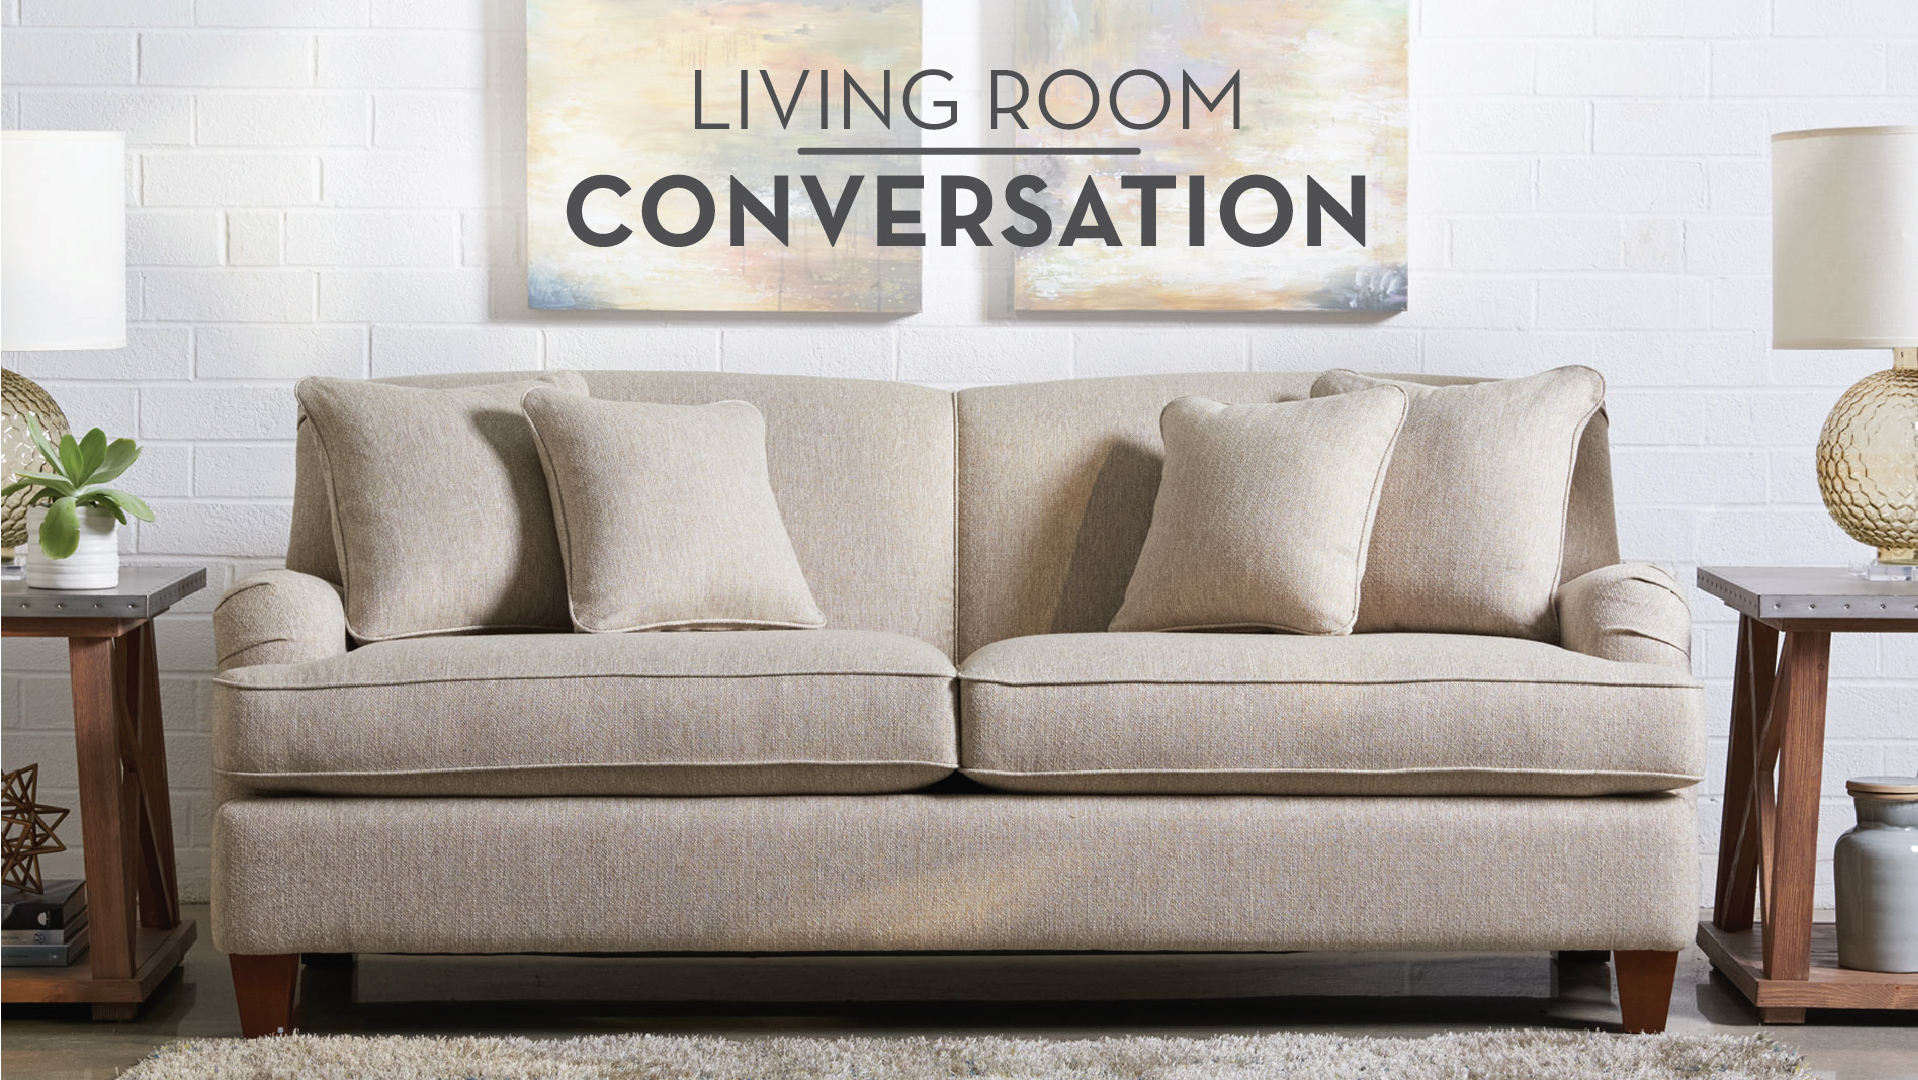 cnn living room conversations